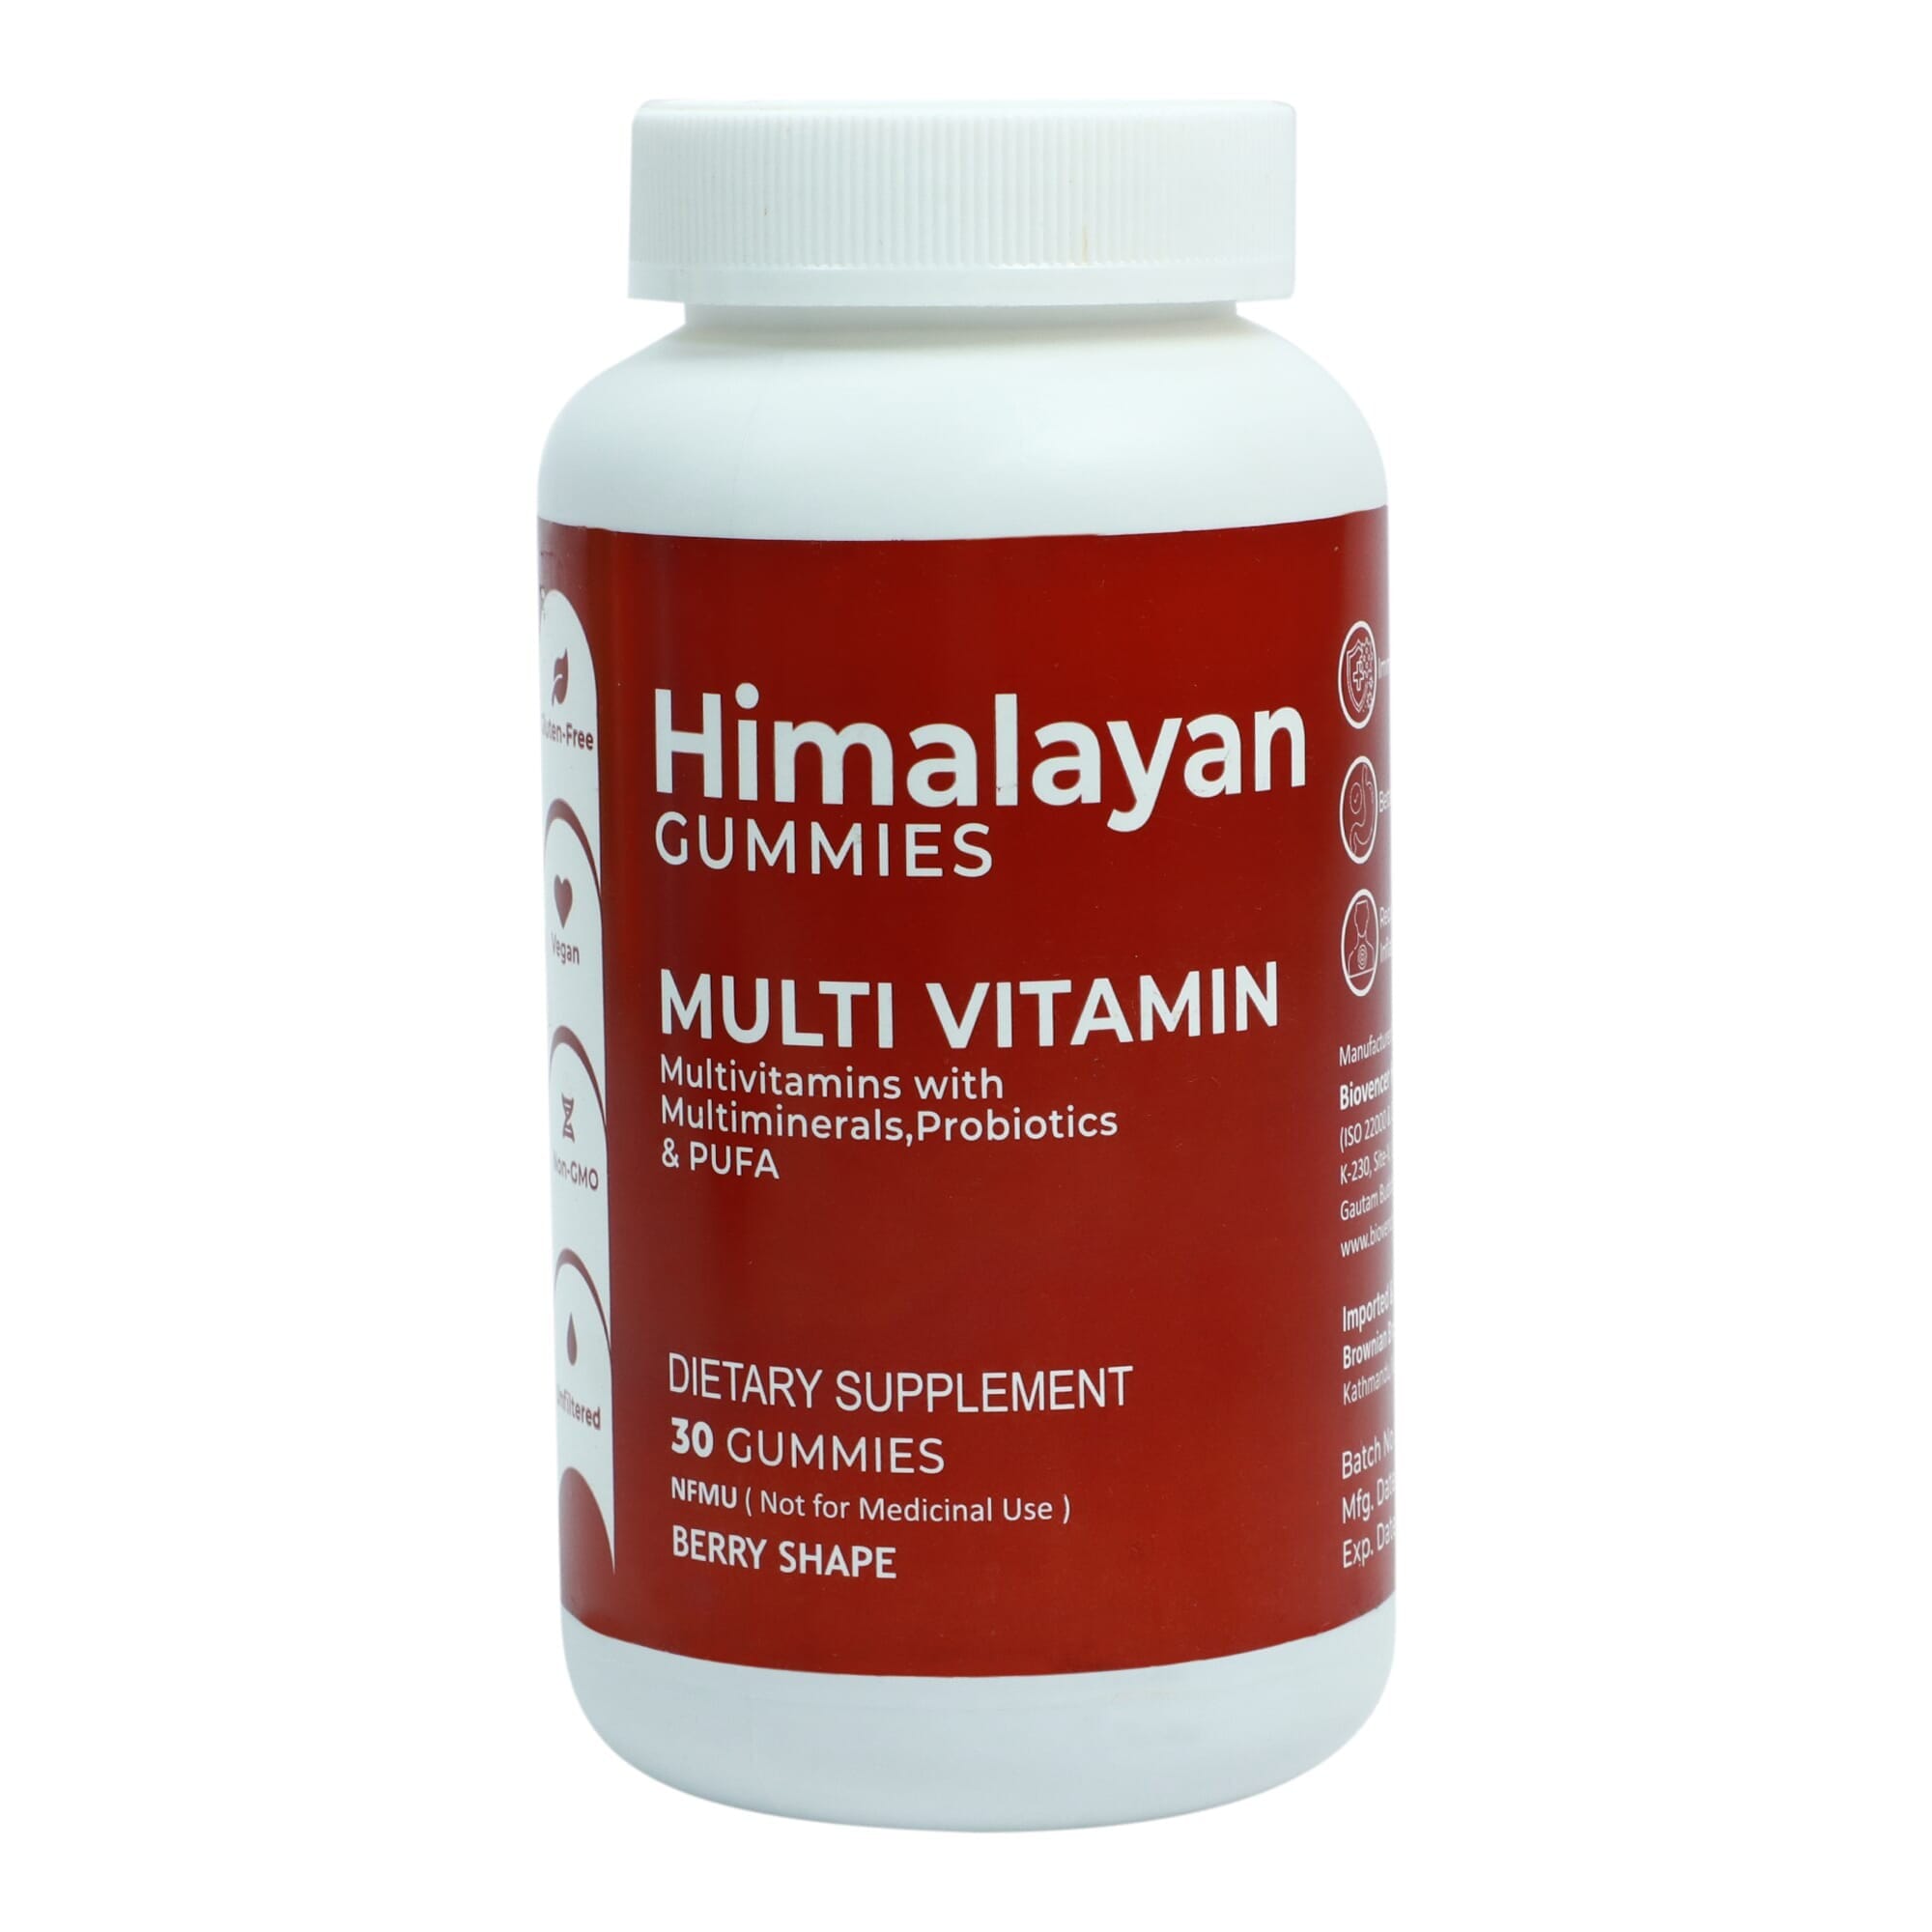 Himalayan Gummies Multivitamin With Multimineral, Probiotics & PUFA For Men And Women (30 Gummies)